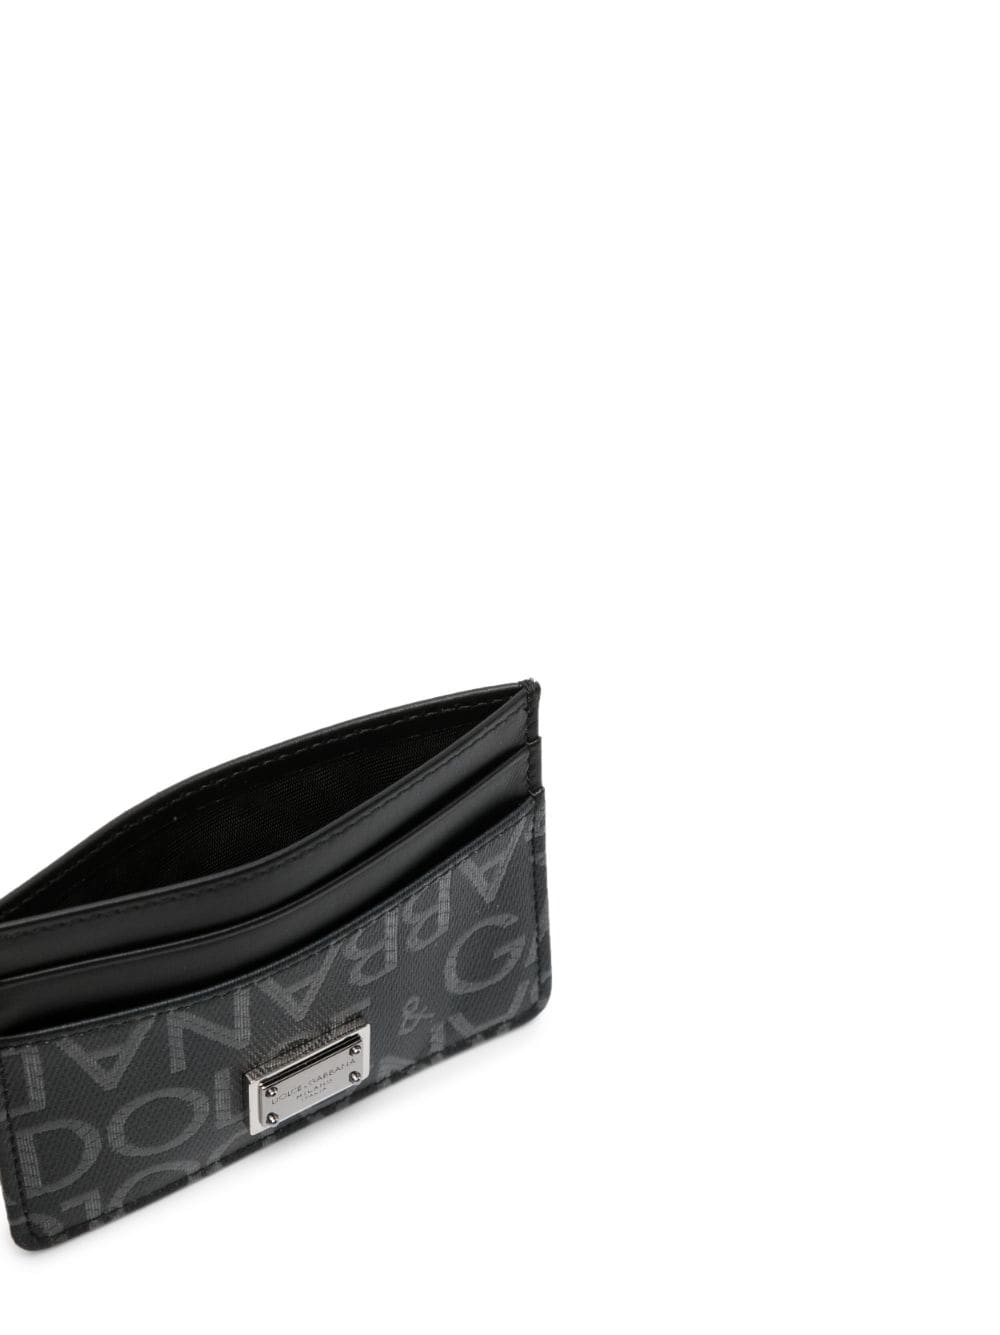 Dolce & Gabbana BP0330 Man Black Wallets - Zuklat